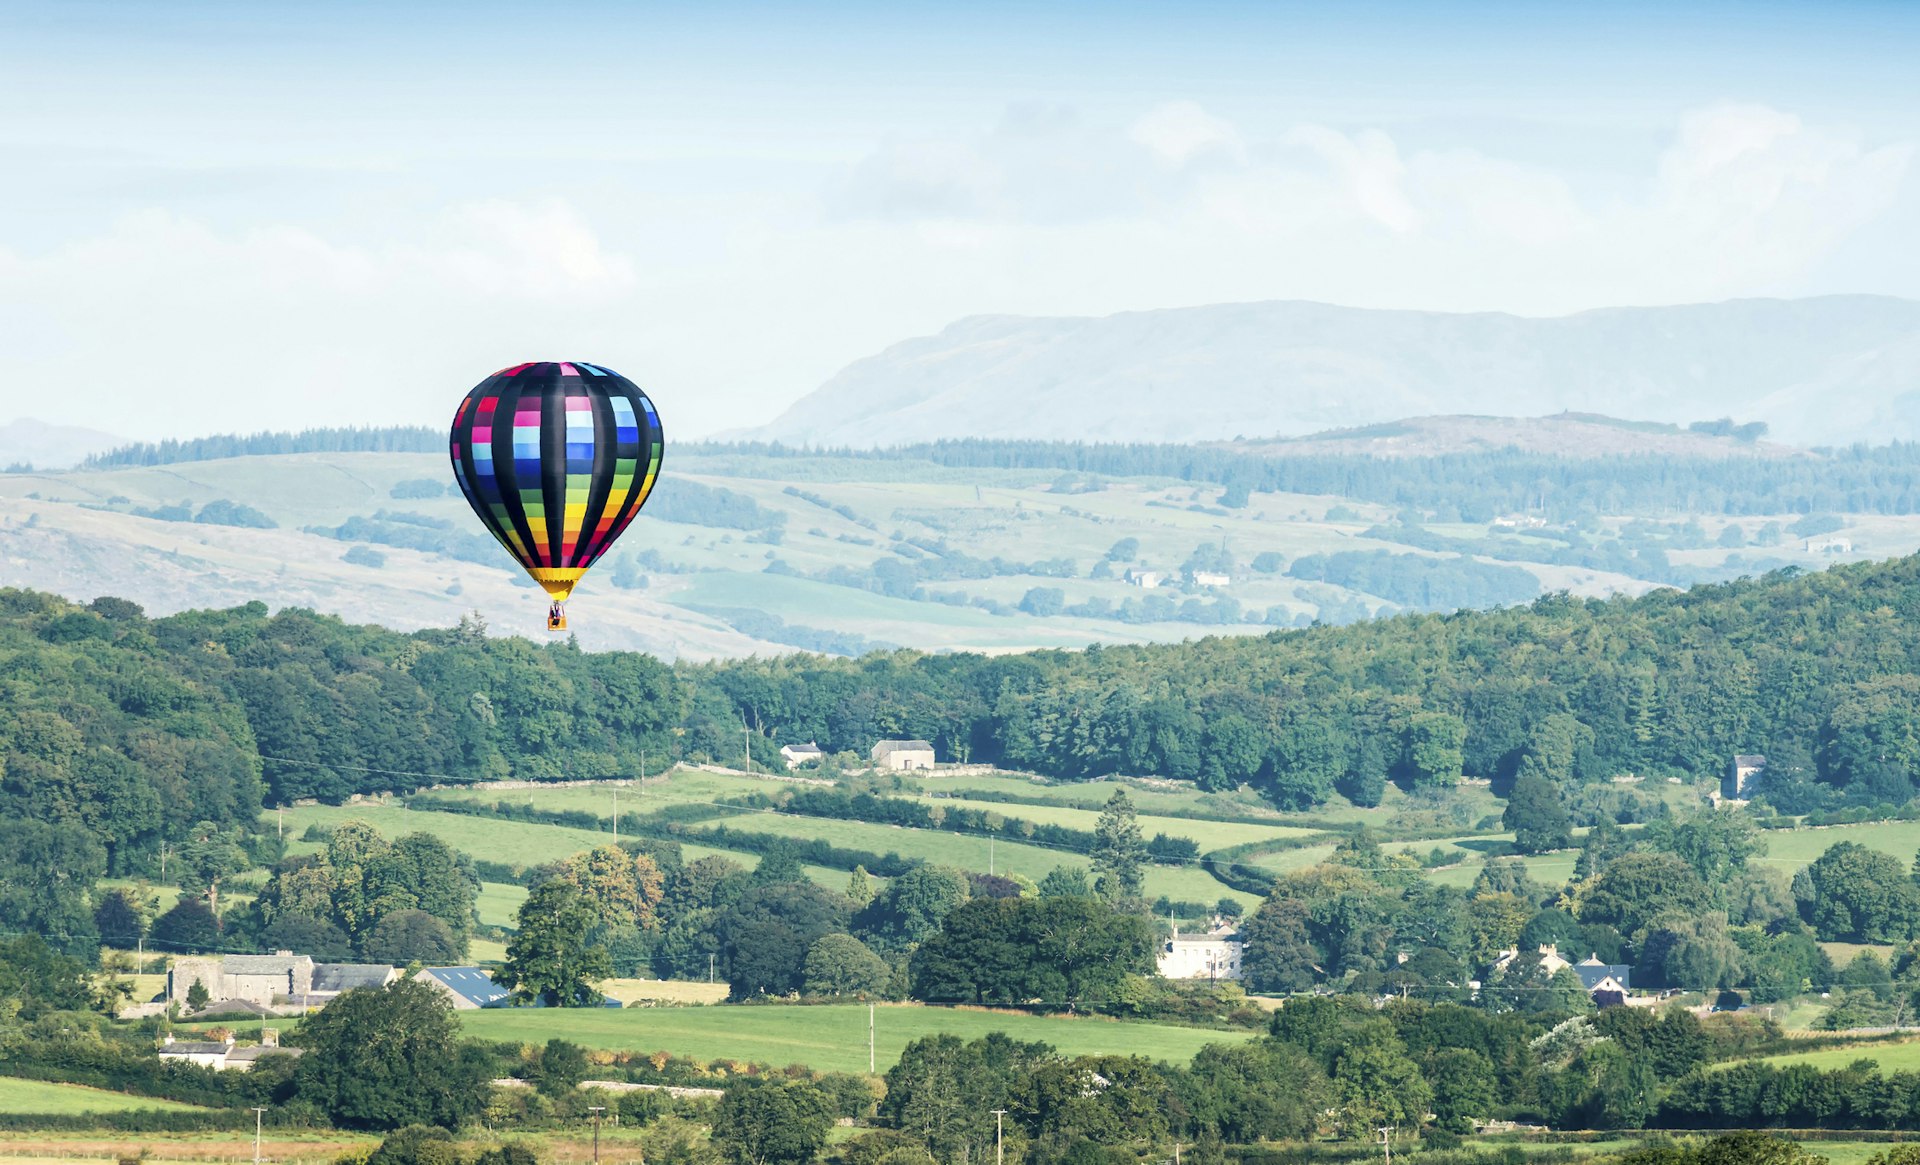 A colorful hot air ballon soars above a green rural scene in Cumbria, England, United Kingdom